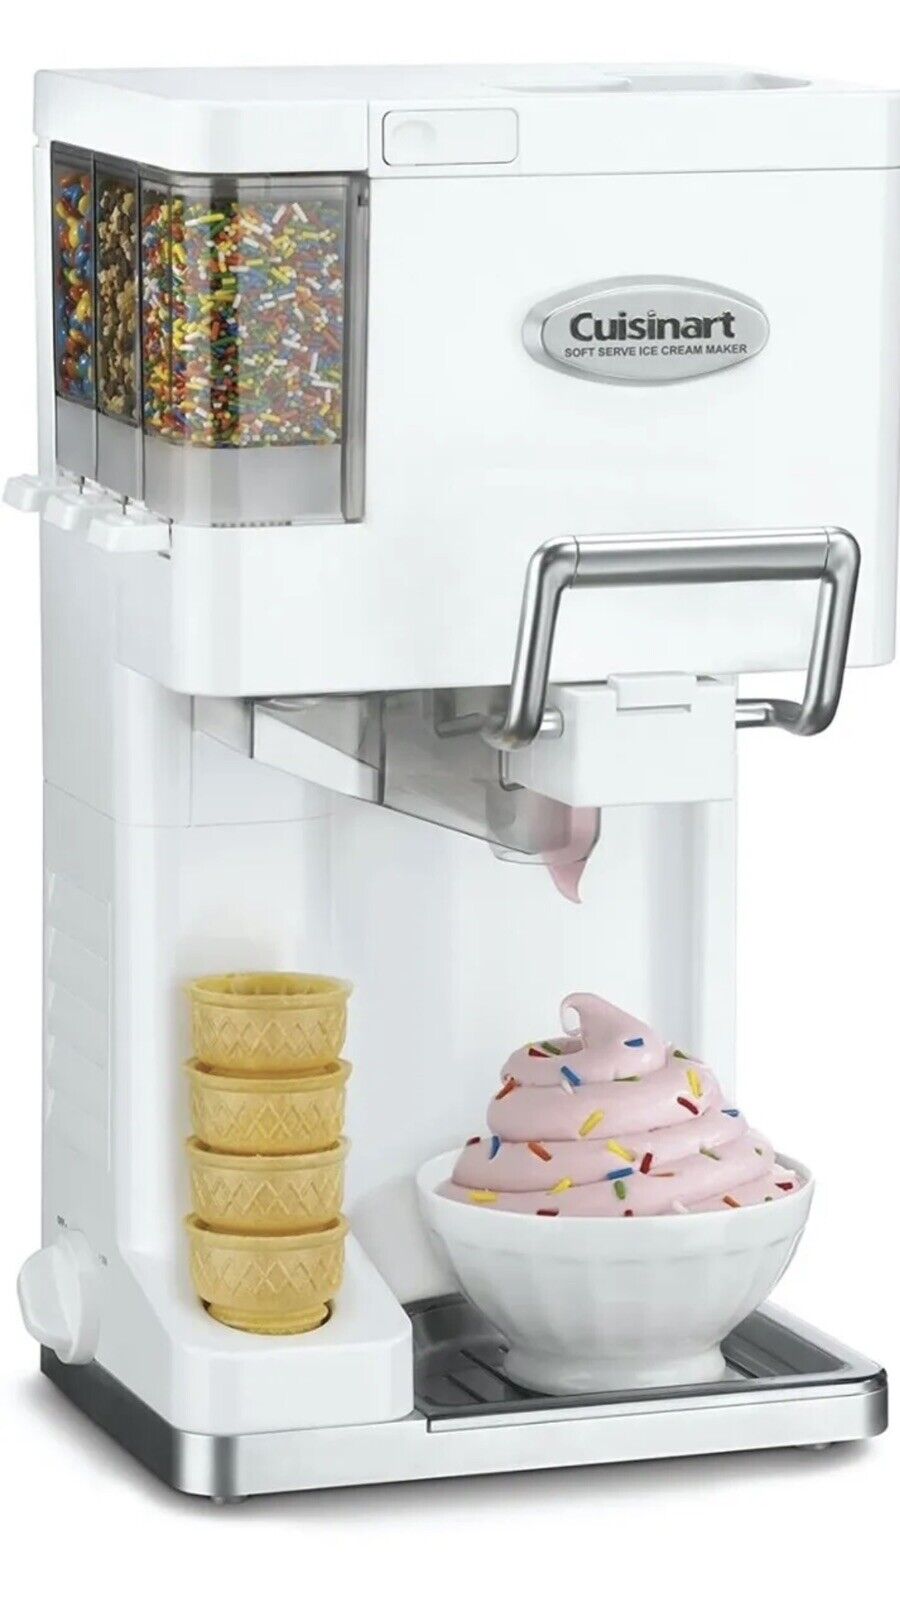 Cuisinart Ice Cream Maker ICE-45 Mix It In Soft Serve 1.5 Quart White WORKS